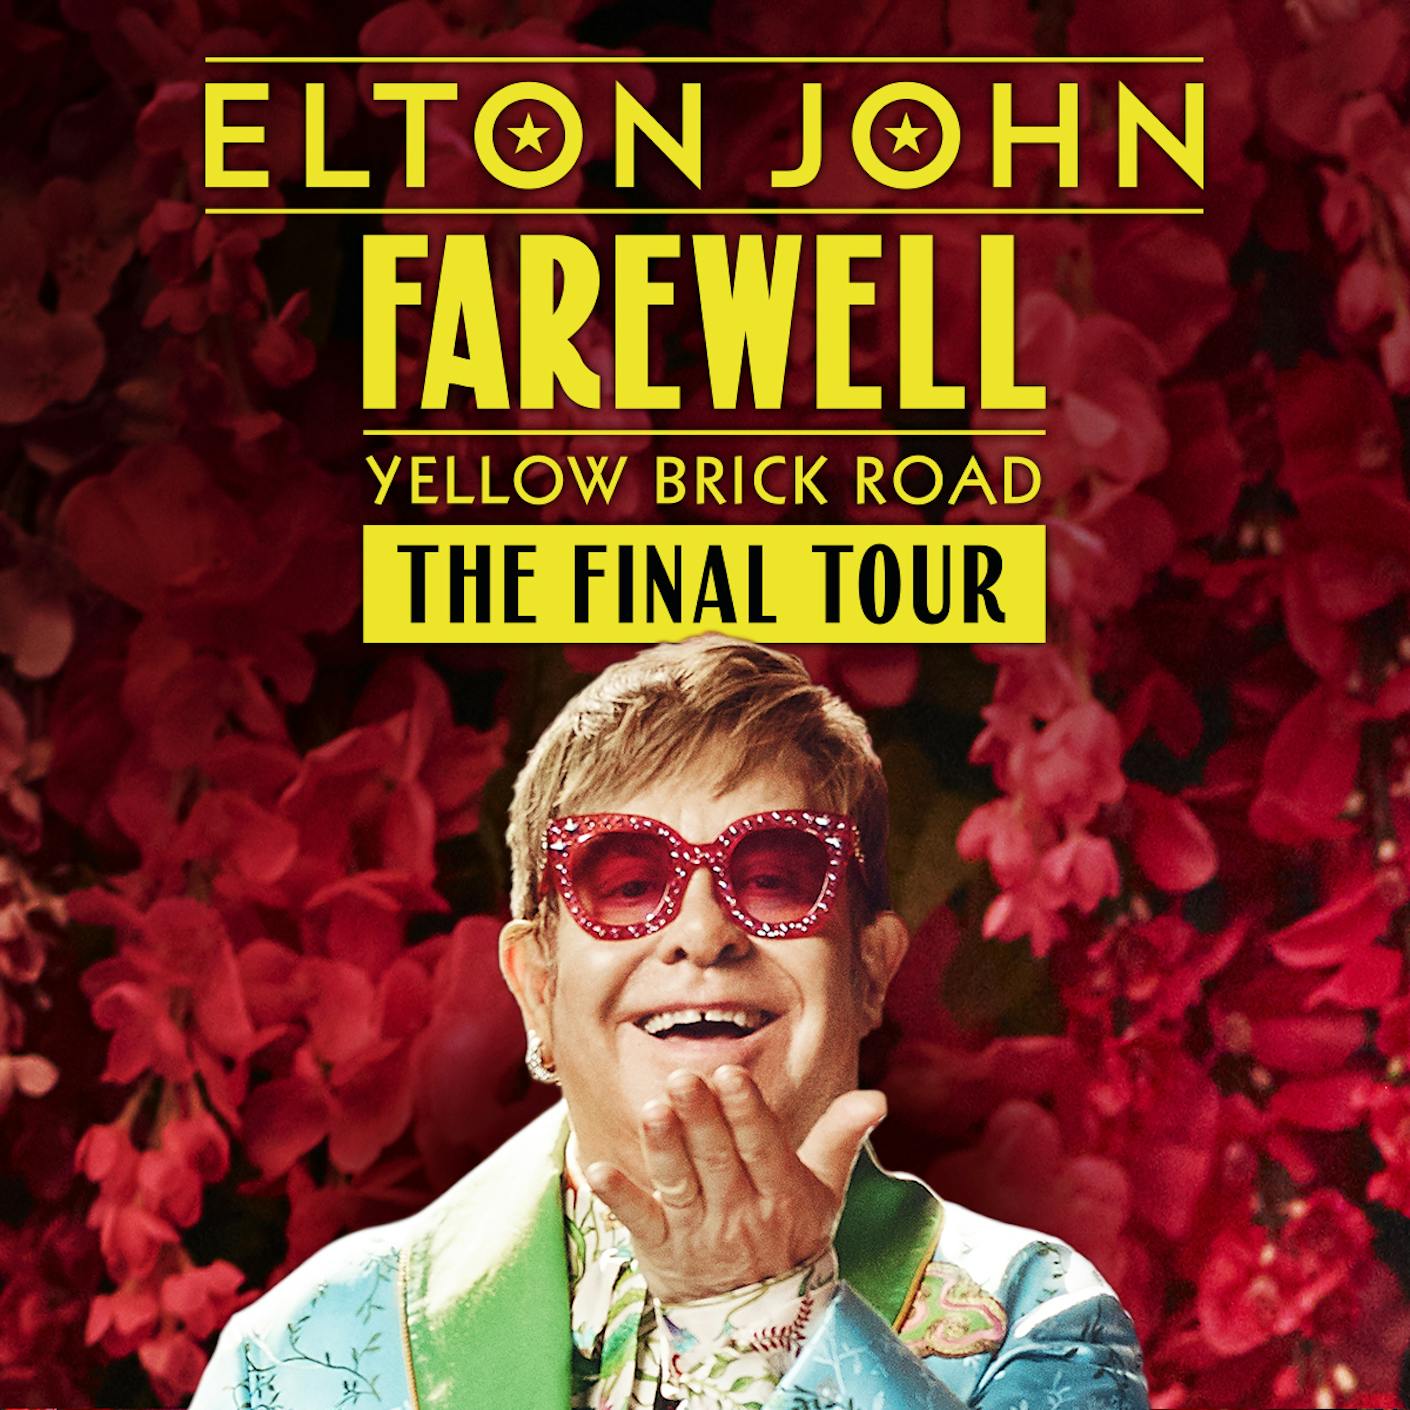 elton john farewell tour support act liverpool